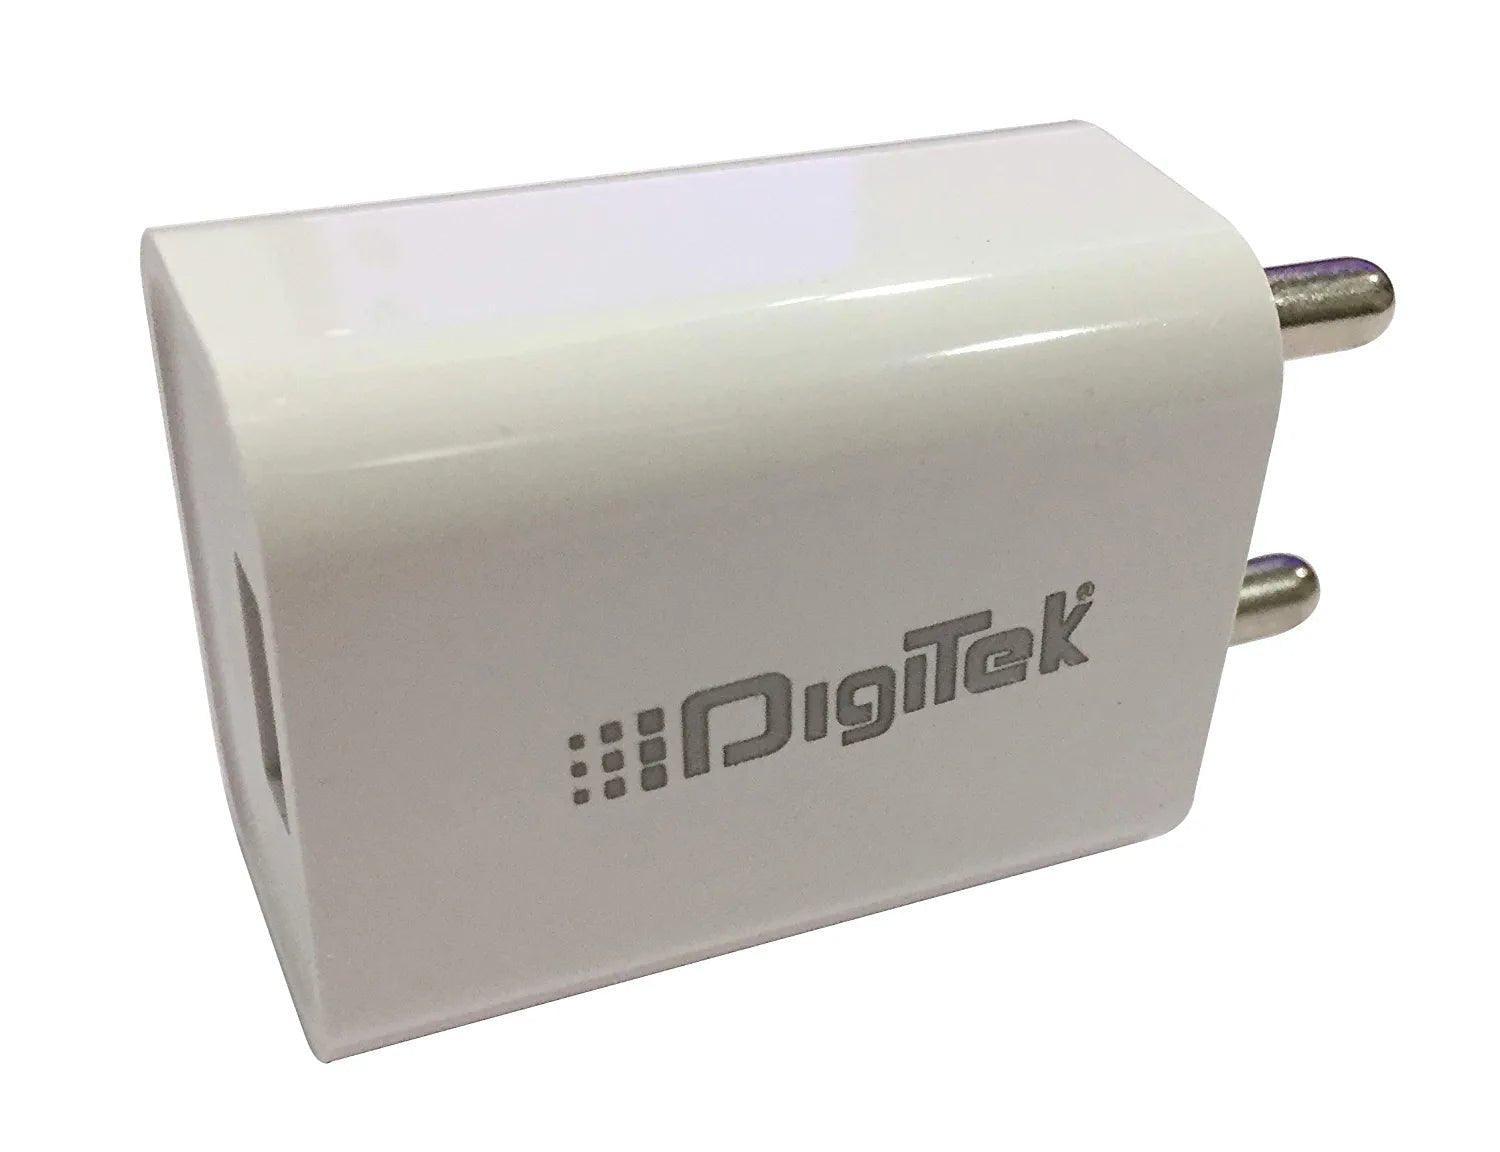 Digitek (DMC-025 MU) Smart Fast Charger 2.4A Usb Adapter For Smartphone With Micro Usb Data Cable 2.4A DMC-025 MU- White - Digitek